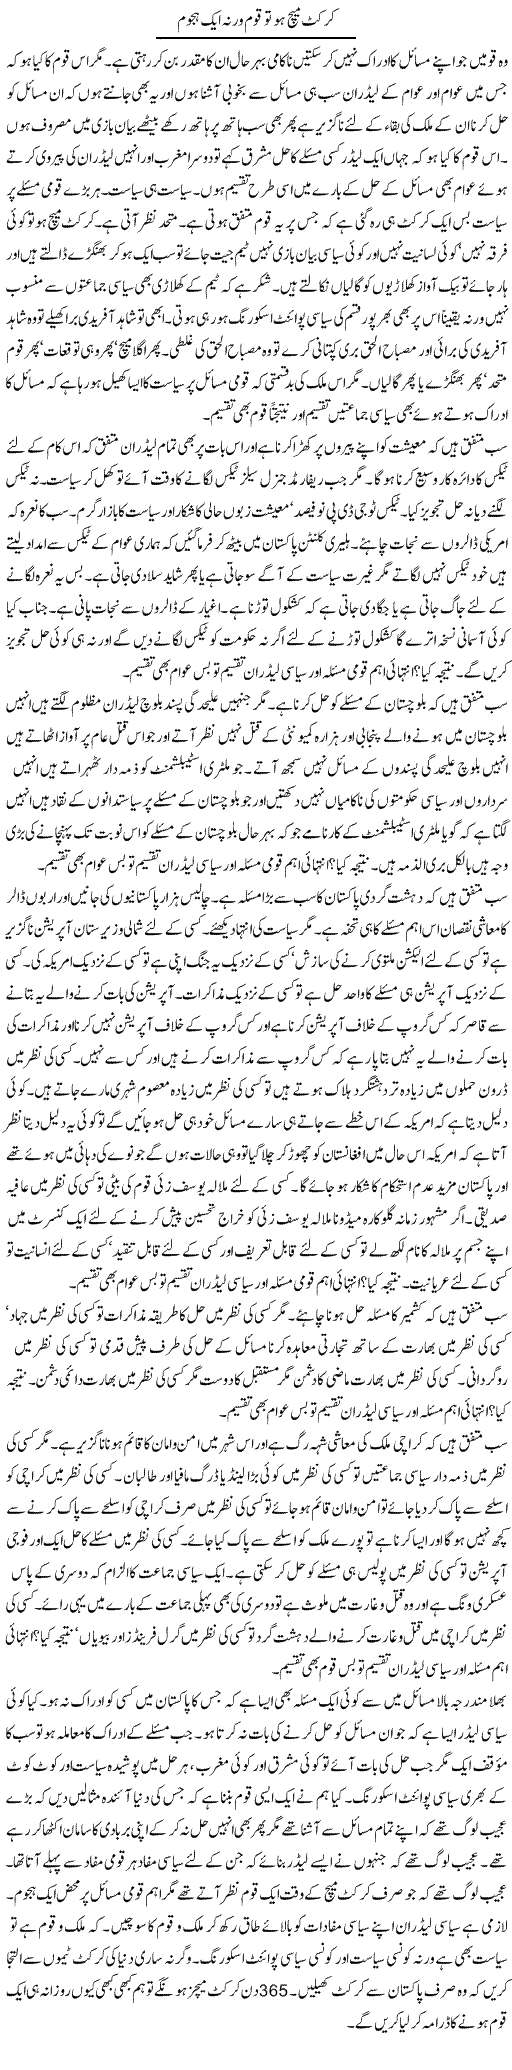 Pakistani Nation Express Column Shahzeb Khanzada 21 October 2012